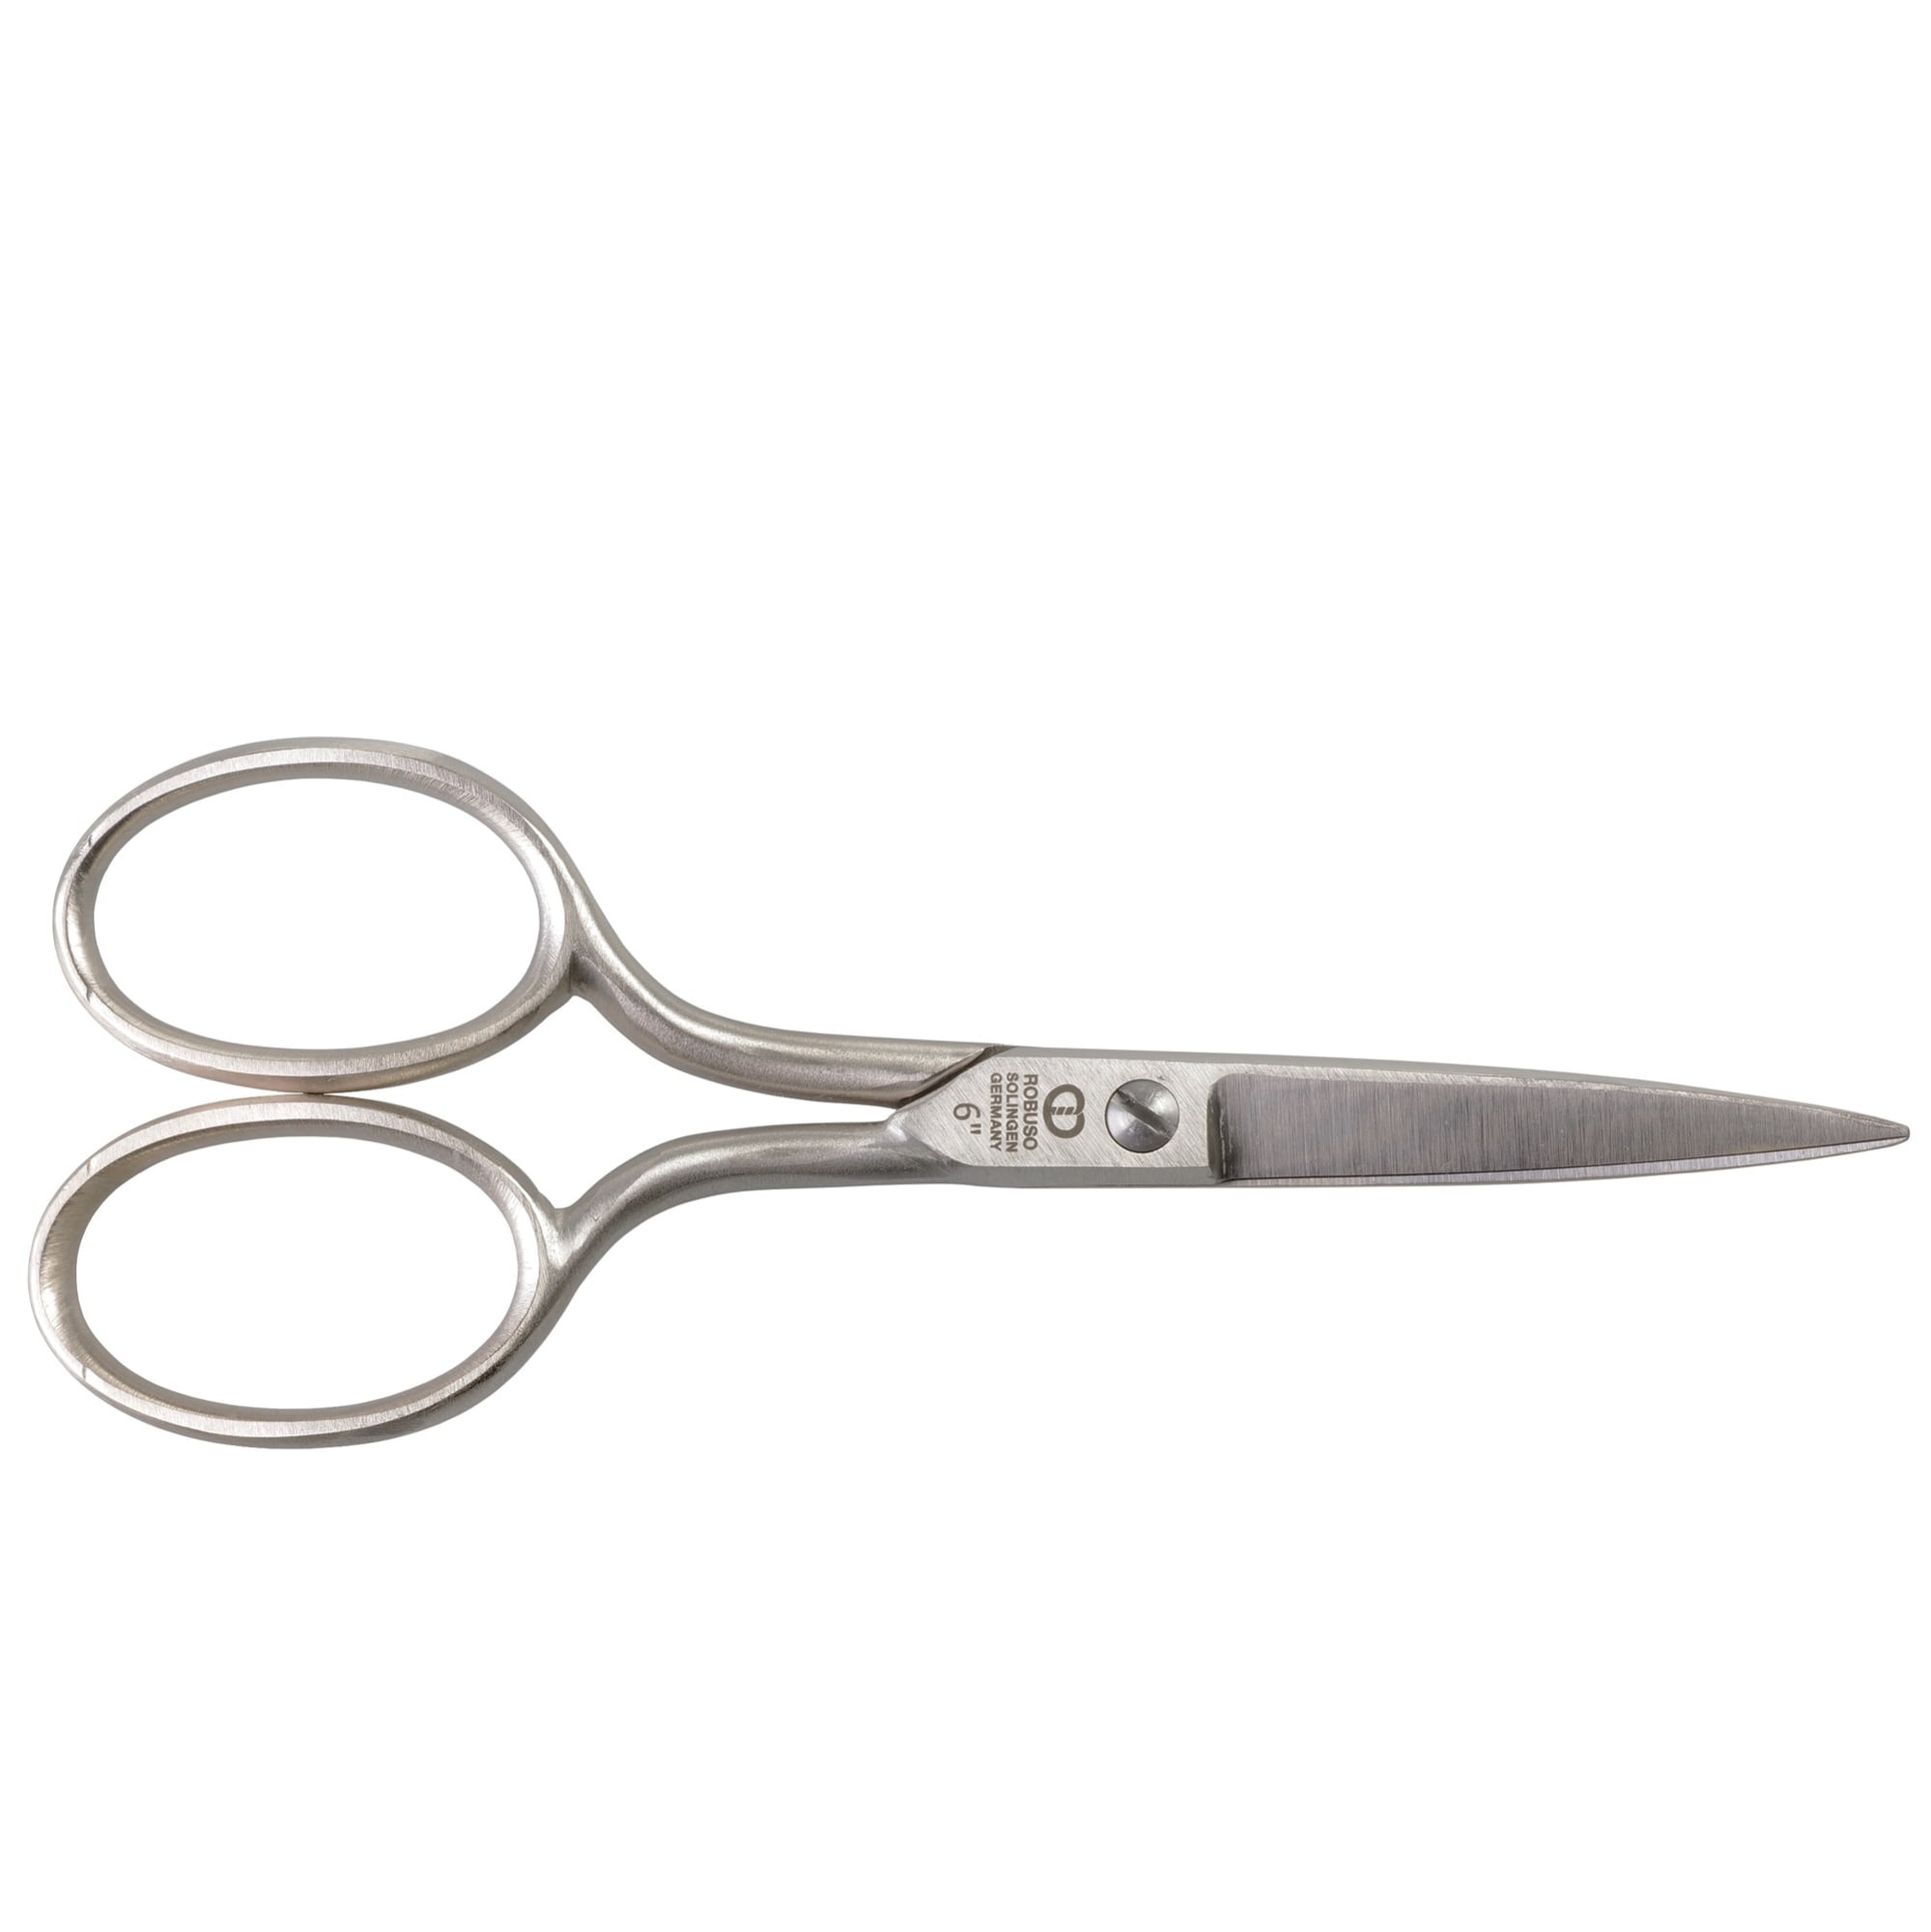 Fabric scissors curved (offset handles), 16 cm / 6" length, image 2